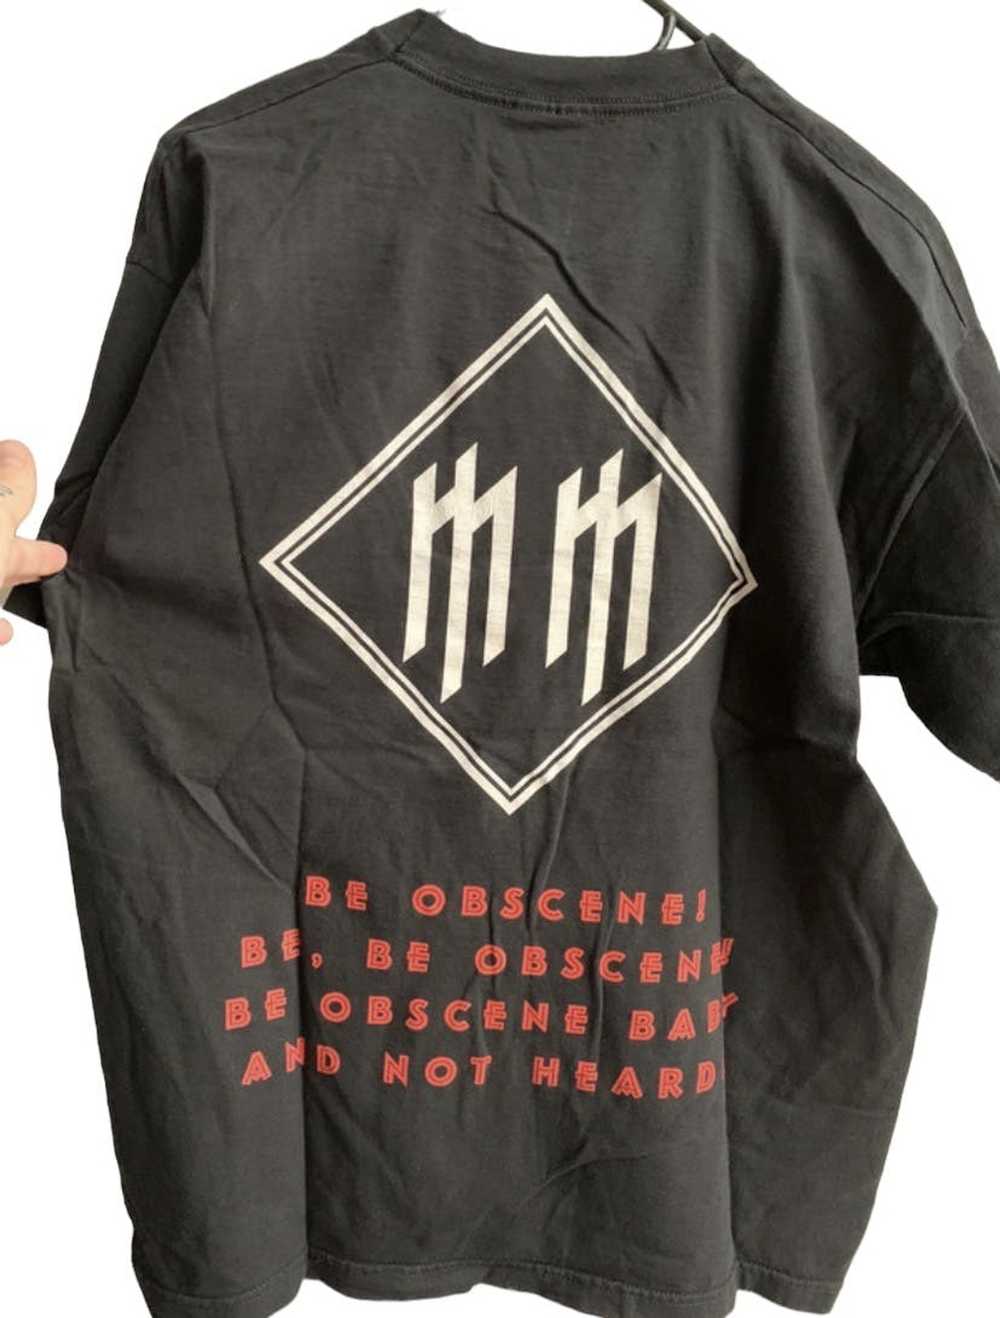 Marilyn Manson × Vintage Marilyn Manson t shirt vinta… - Gem